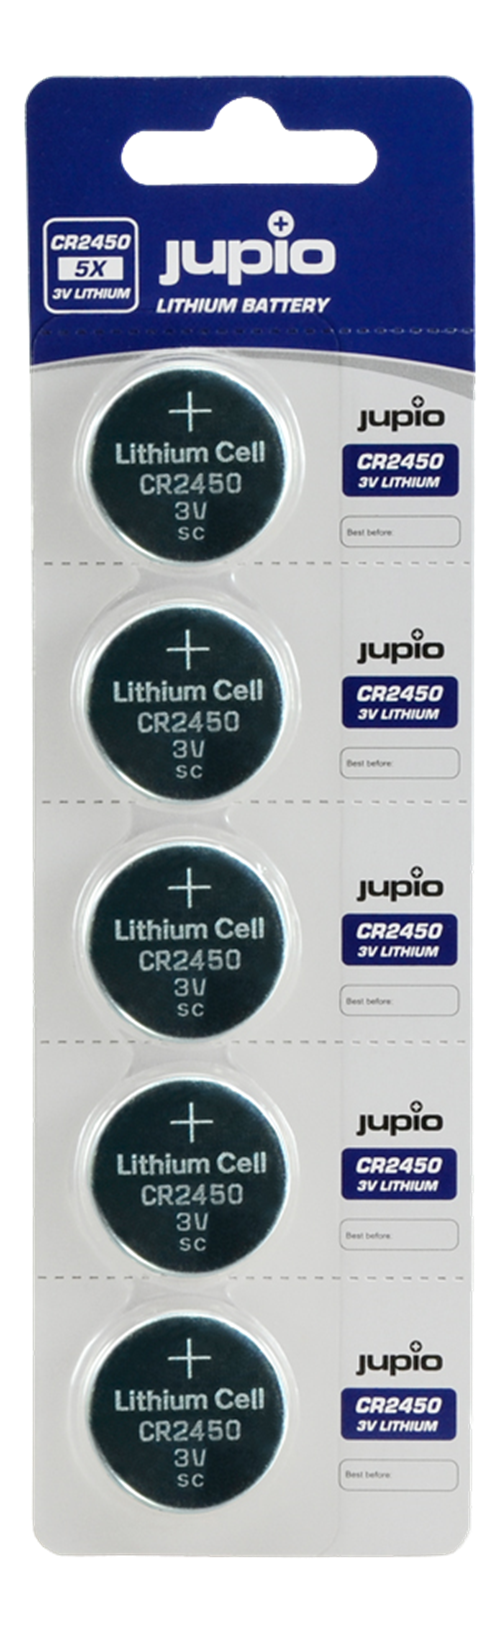 Jupio CR2450 3V batteri, 5 stk